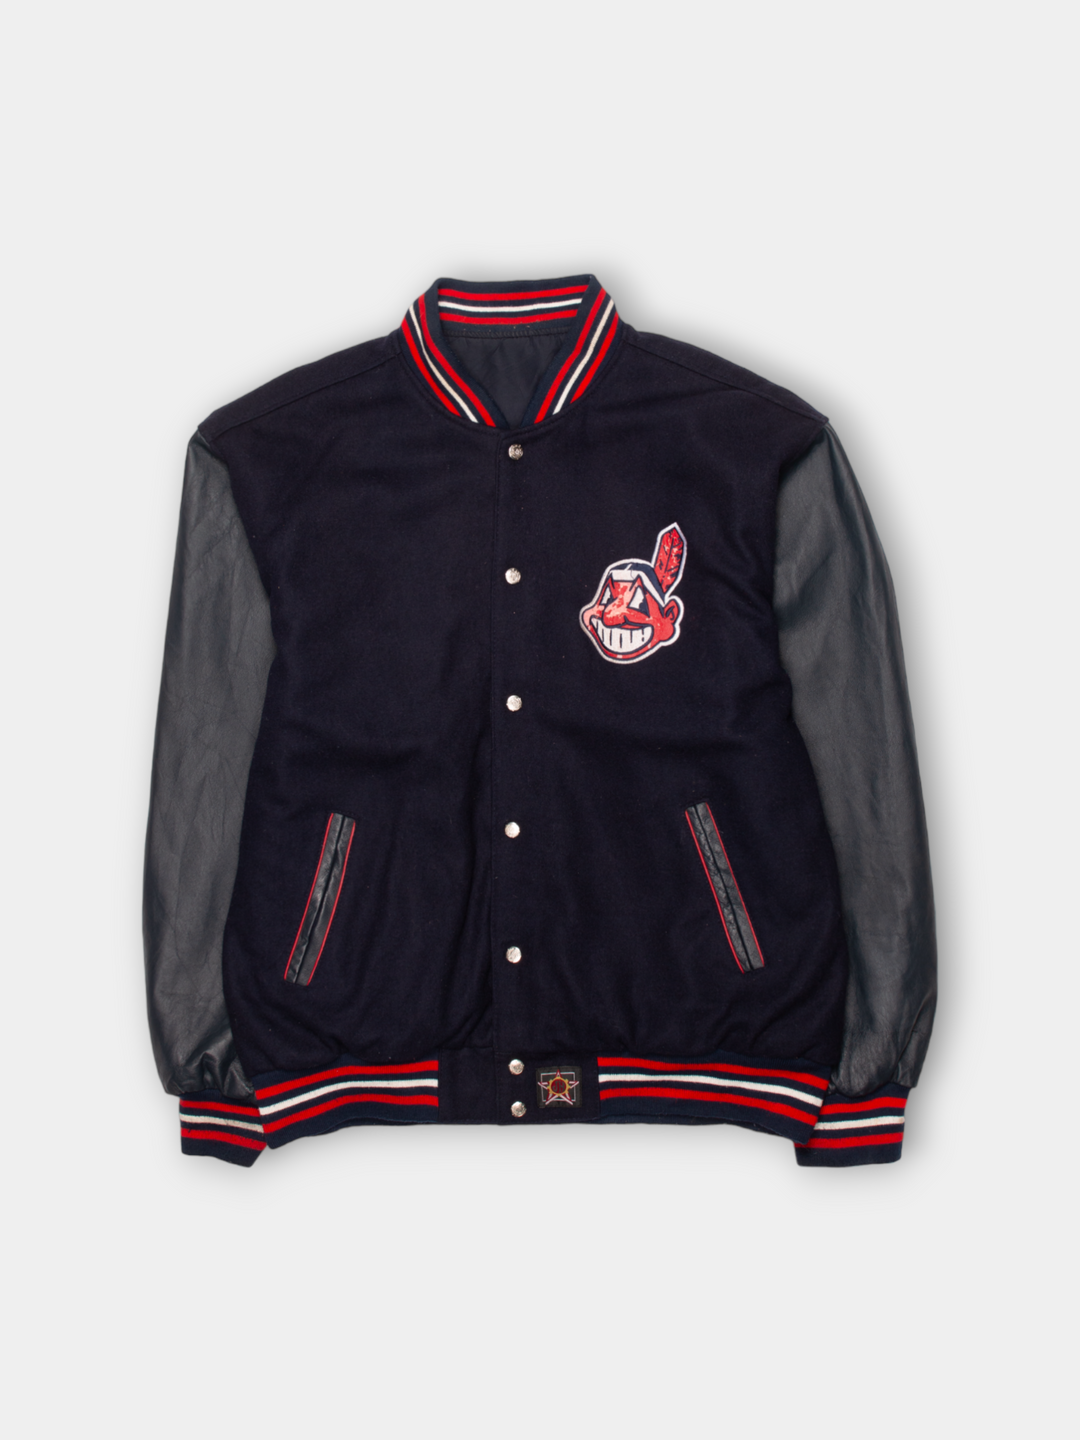 90s Cleveland Indians Varsity Jacket (XL)